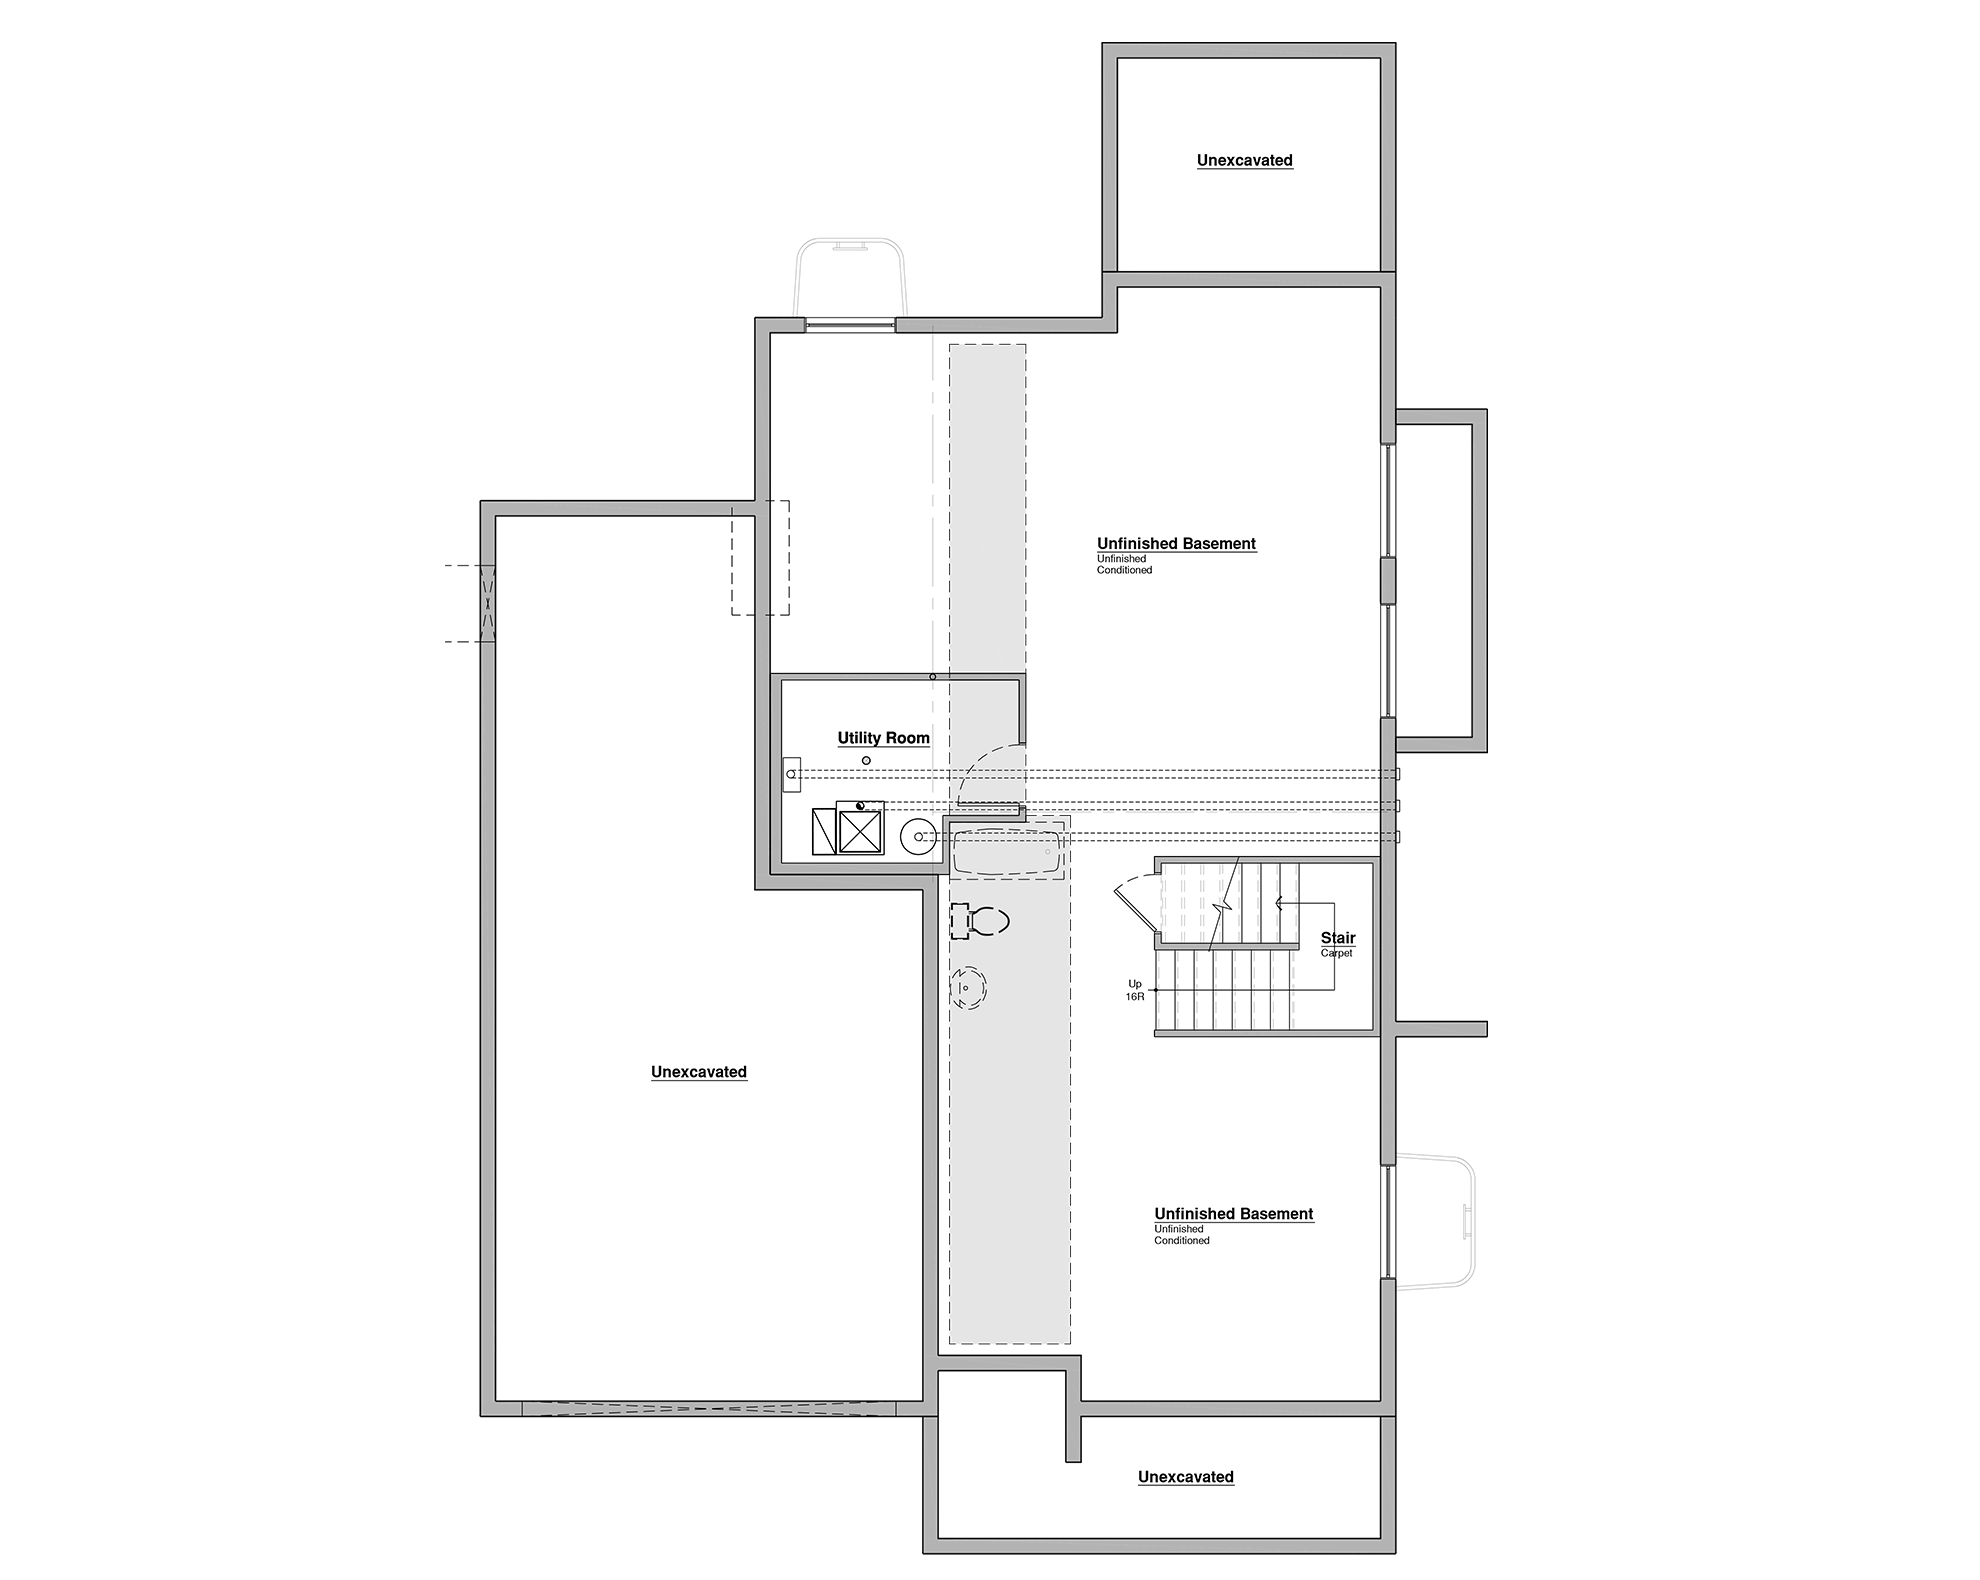 Semi-Custom basement floor plan